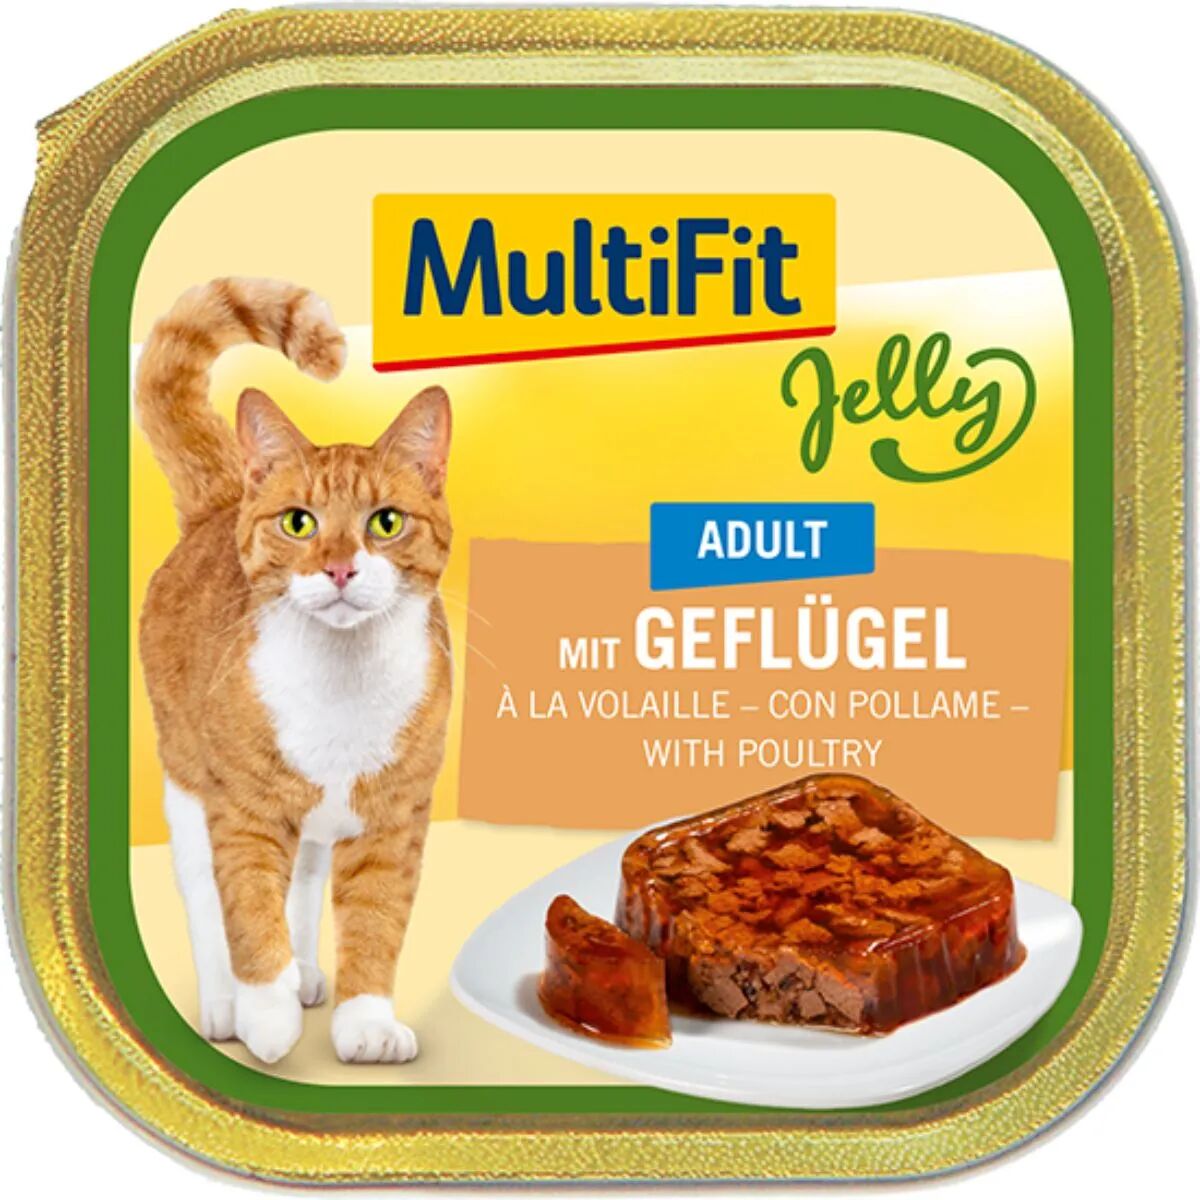 MULTIFIT Jelly Cat Vaschetta Multipack 16x100G POLLAME